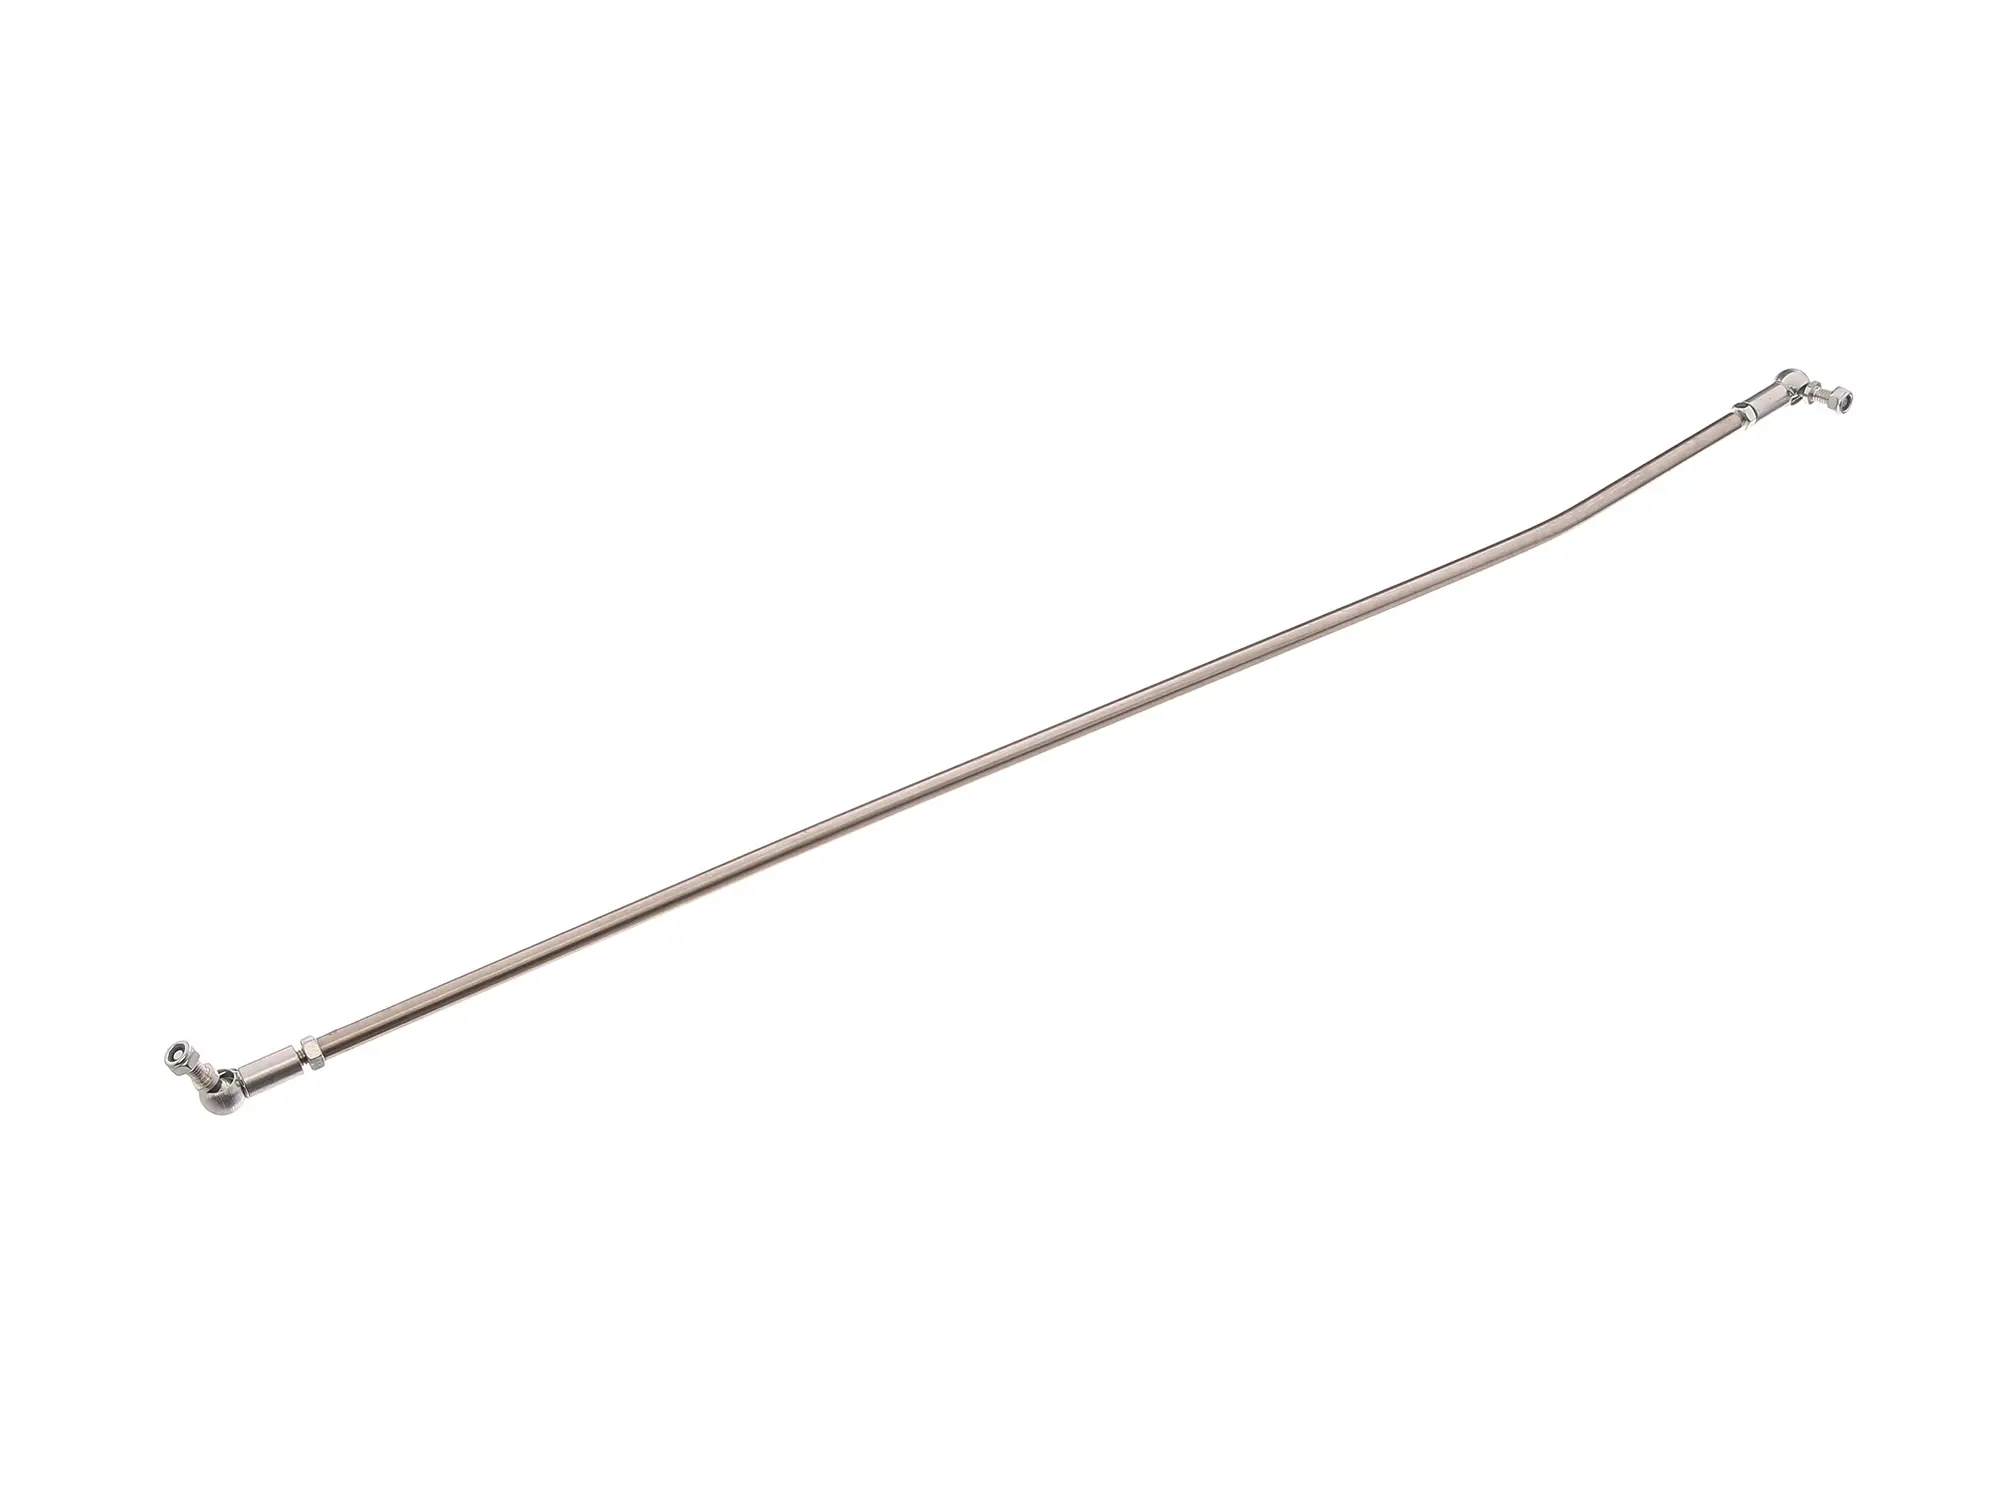 Shift rod (stainless steel) - for IWL SR56 Wiesel, SR59 Berlin, Item no: 10067800 - Image 1